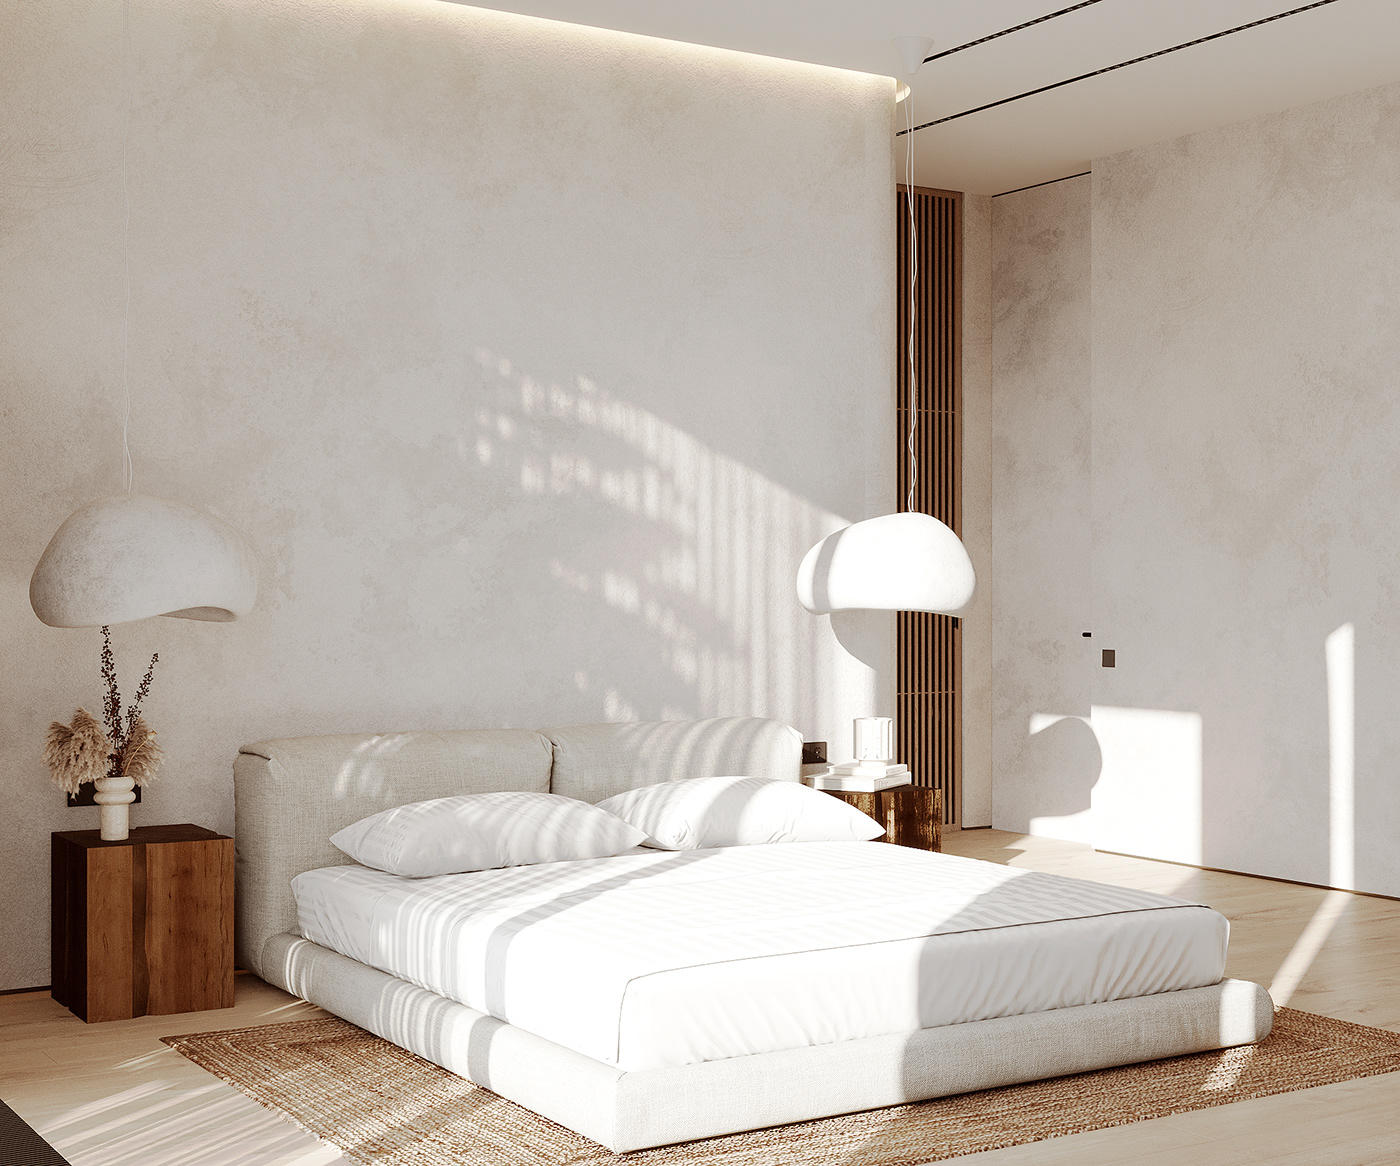 3ds max apartment architecture design exterior Interior Project visualization